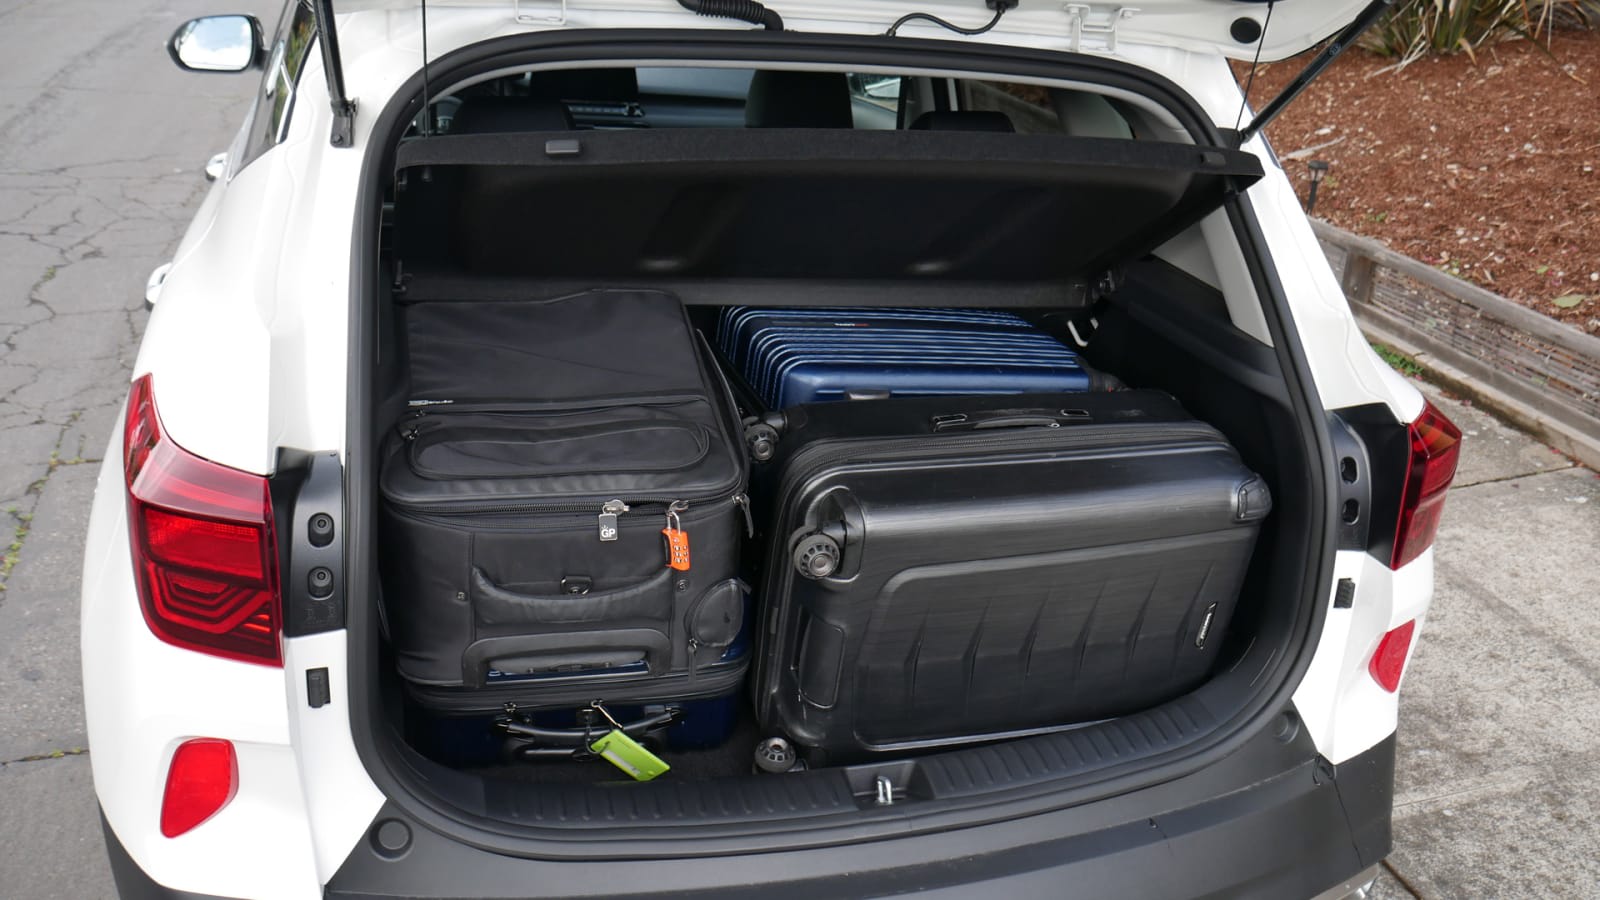 2021 Kia Seltos Luggage Test How Big Is The Trunk Cargo